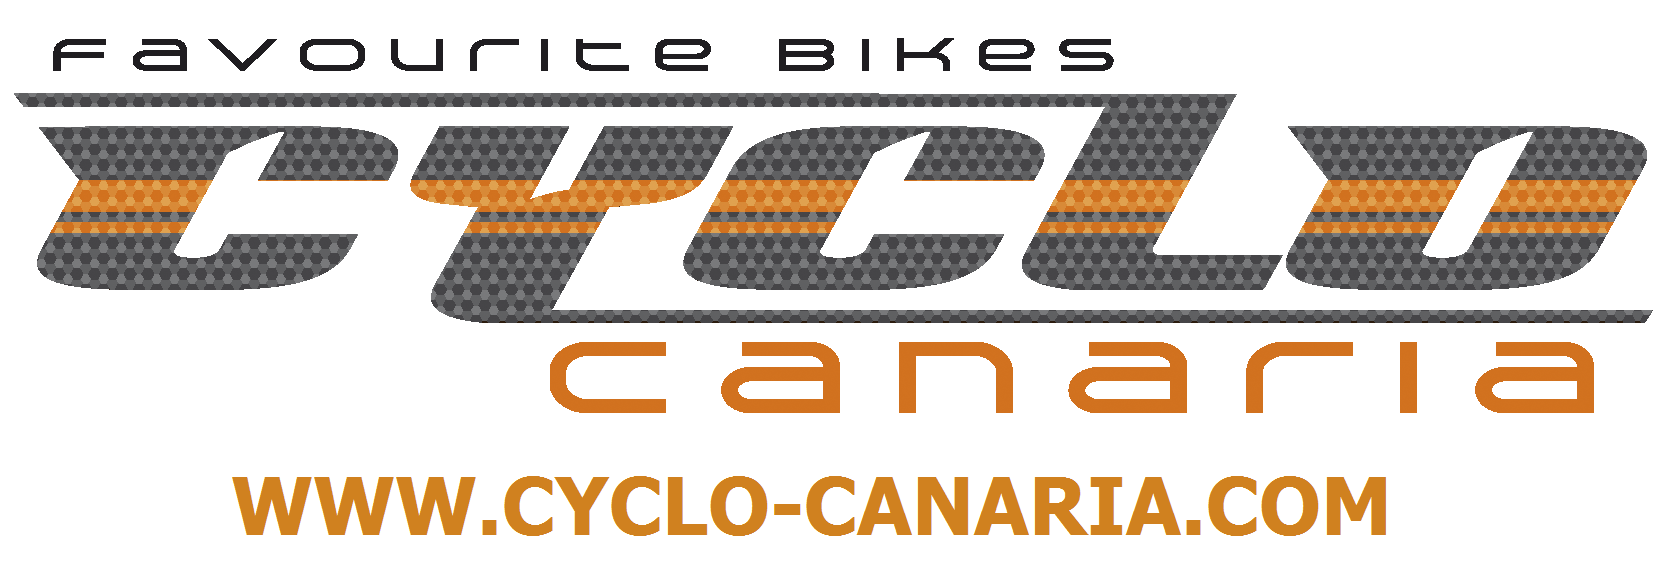 (c) Cyclo-canaria.com